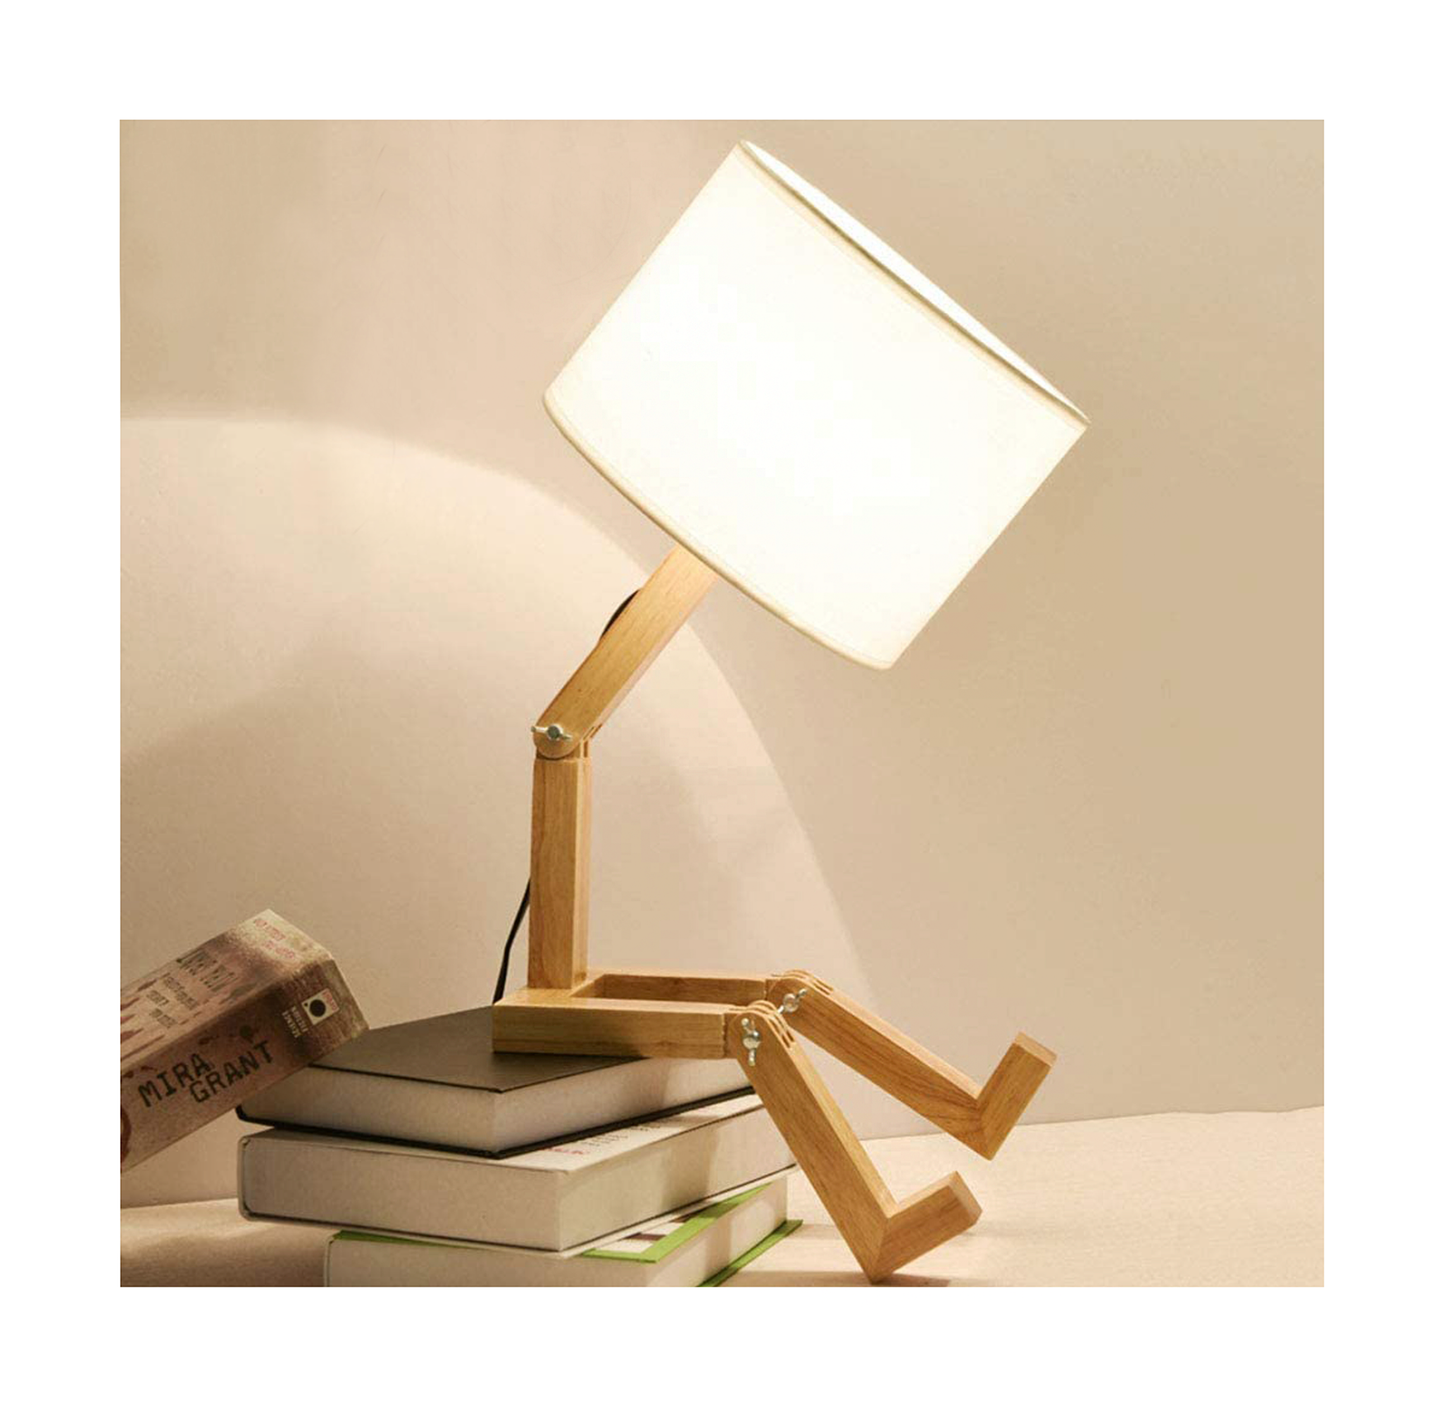 Robot Lamp - Book Holder